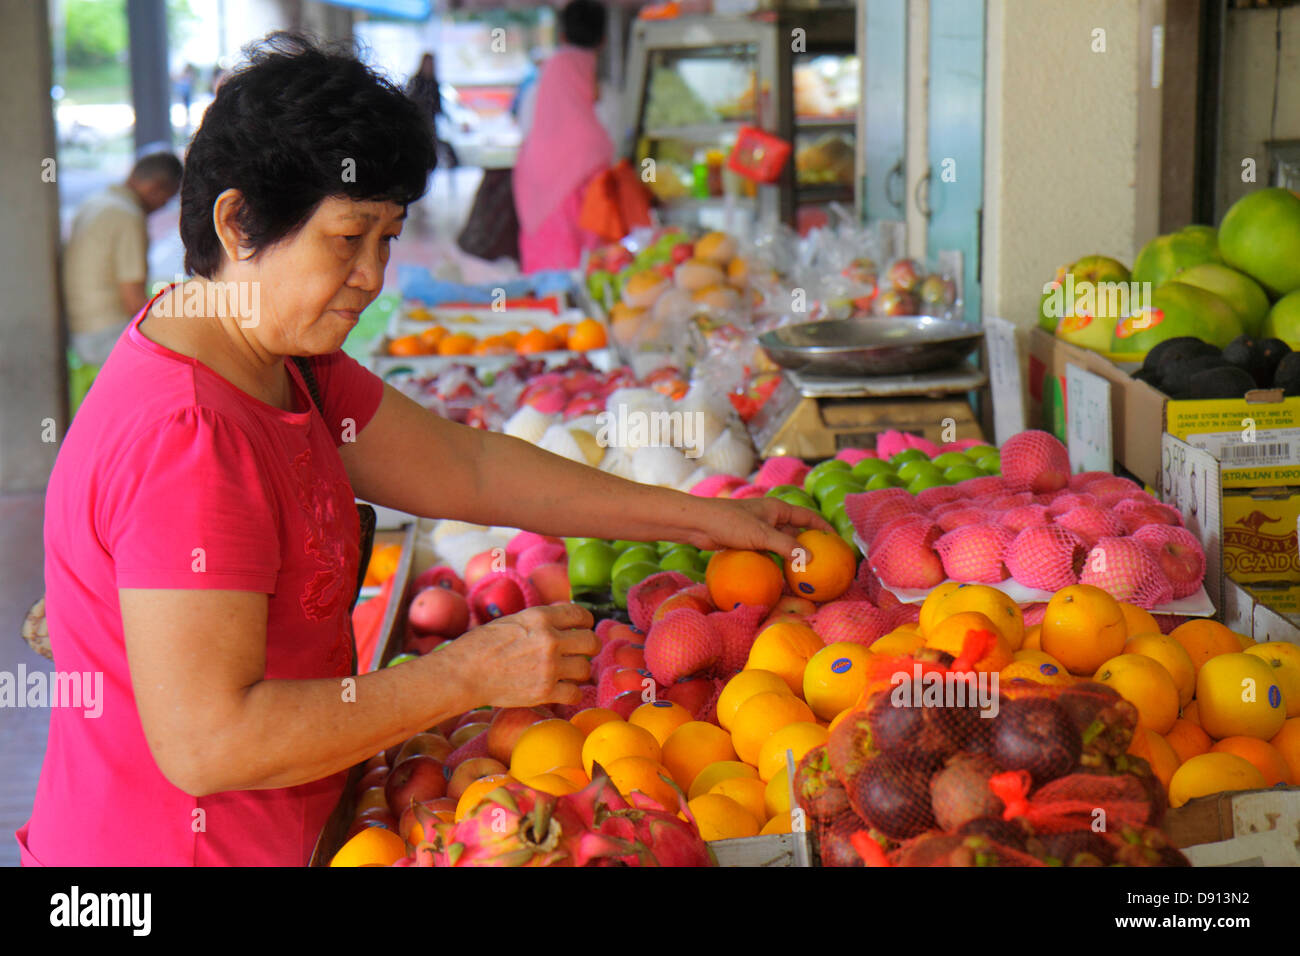 Singapore,Kallang Road,produce stand,fruits,oranges,Asian woman female women,shopping shopper shoppers shop shops market markets marketplace buying se Stock Photo